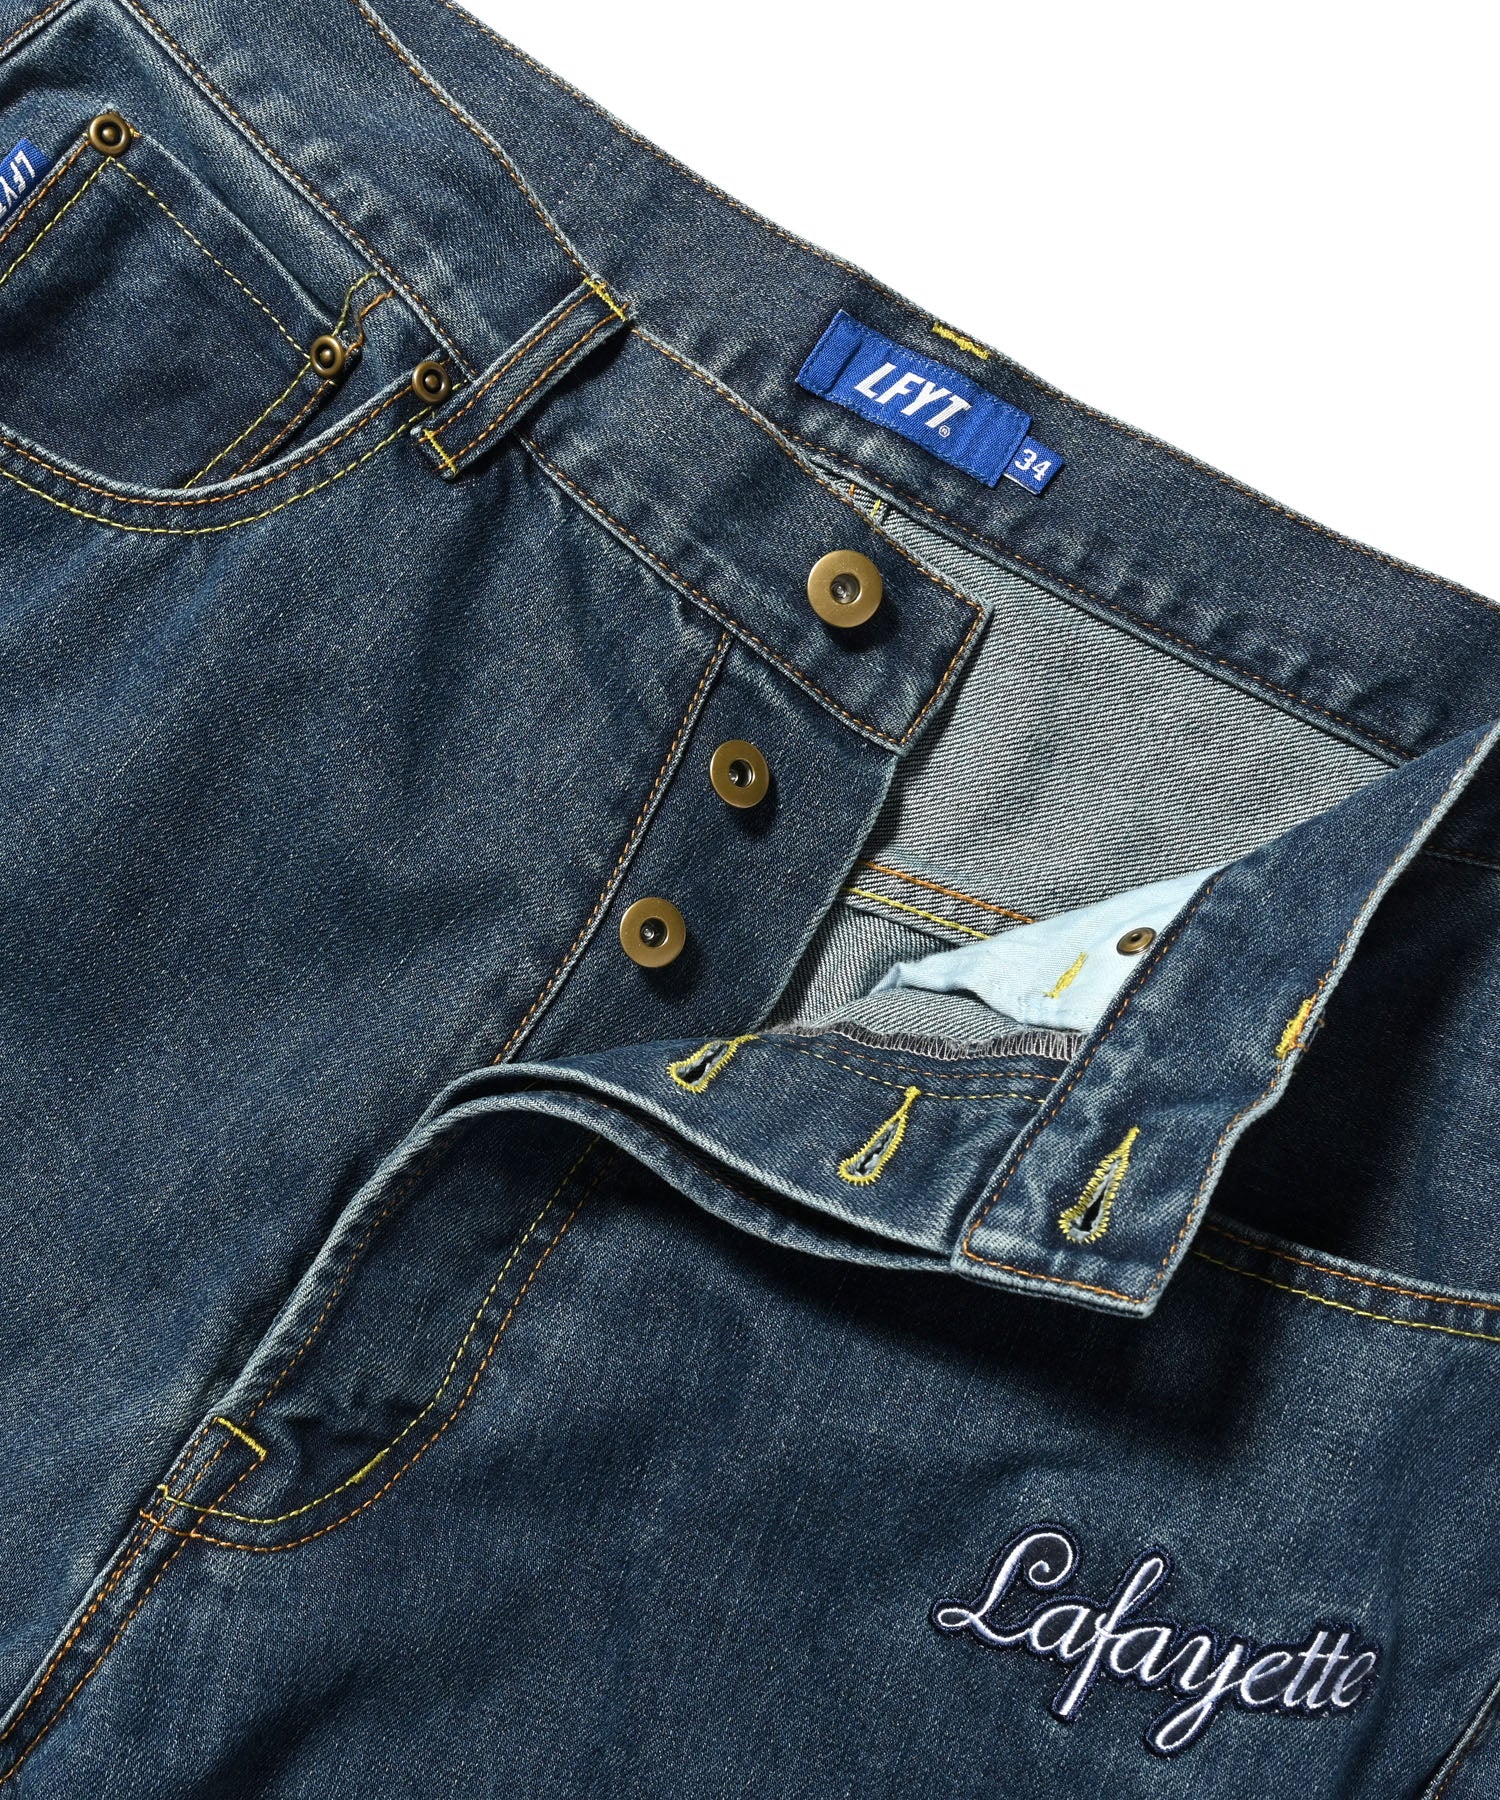 LFYT 通體徽章牛仔長褲 寬鬆版型 淺藍色 LS231101